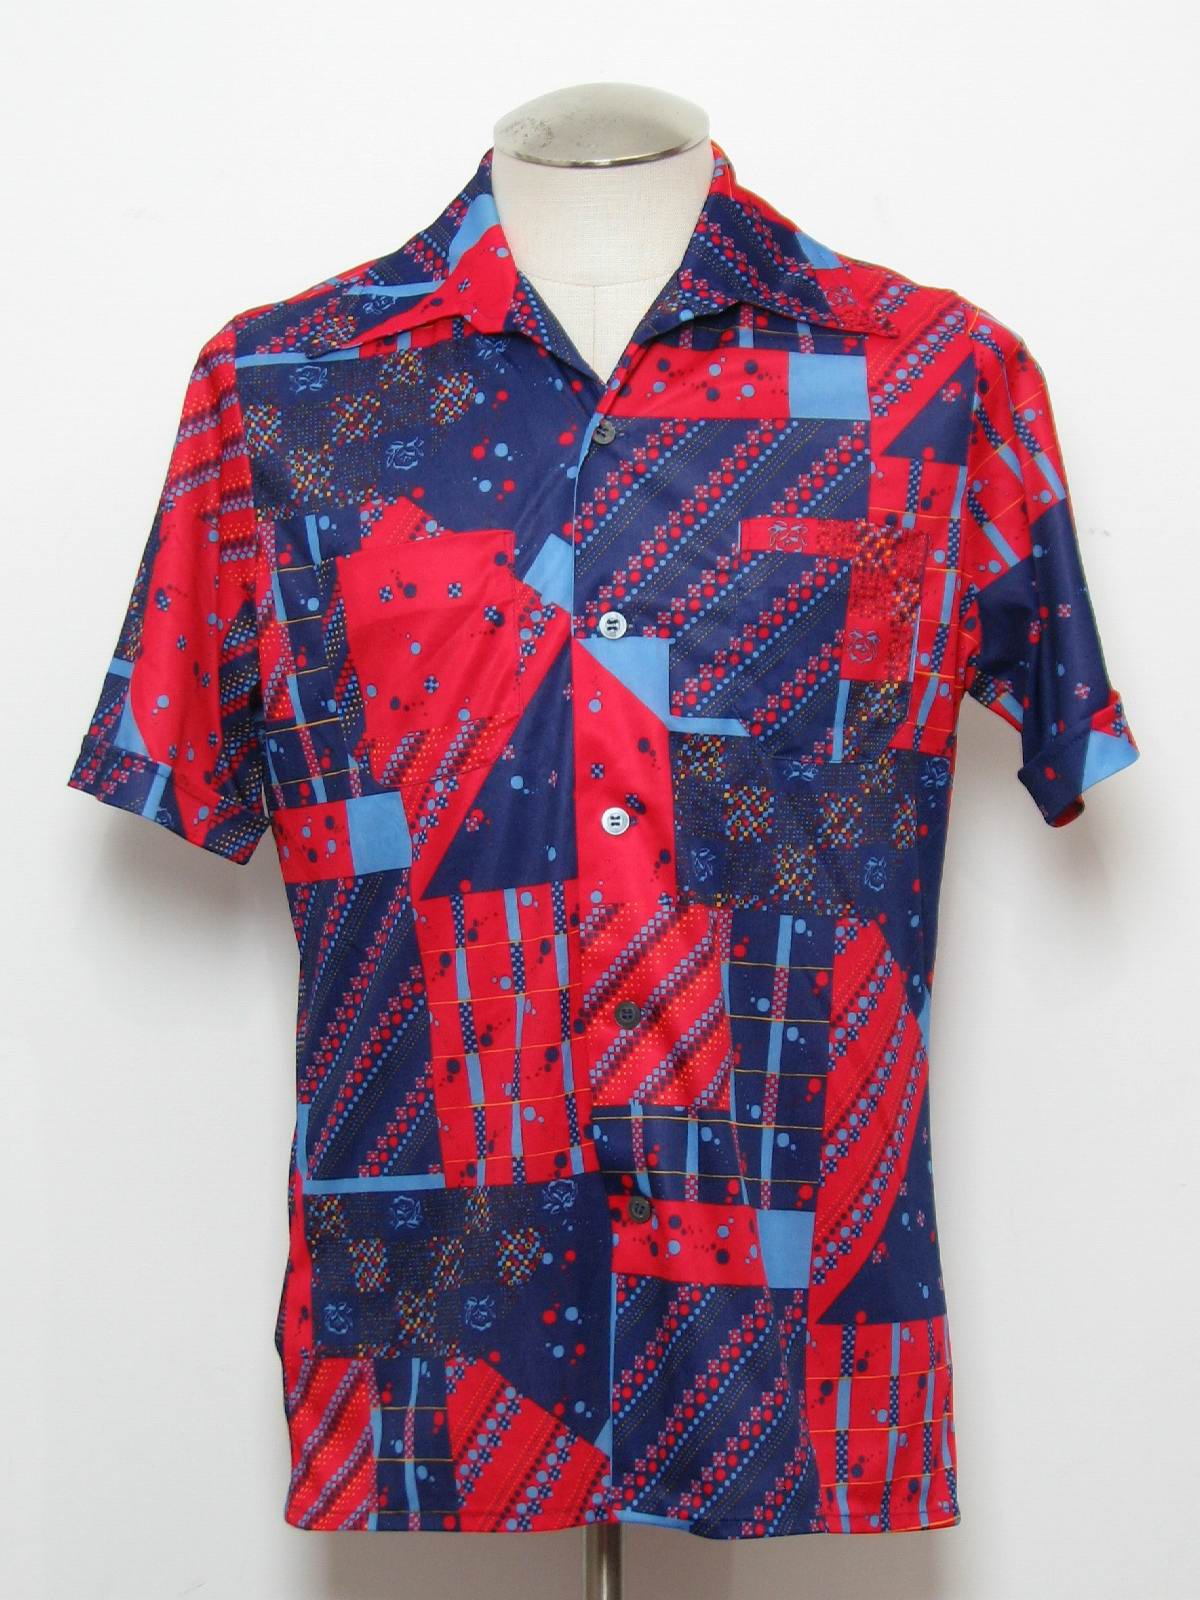 Retro 70s Print Disco Shirt (Home Sewn) : 70s -Home Sewn- Mens red ...